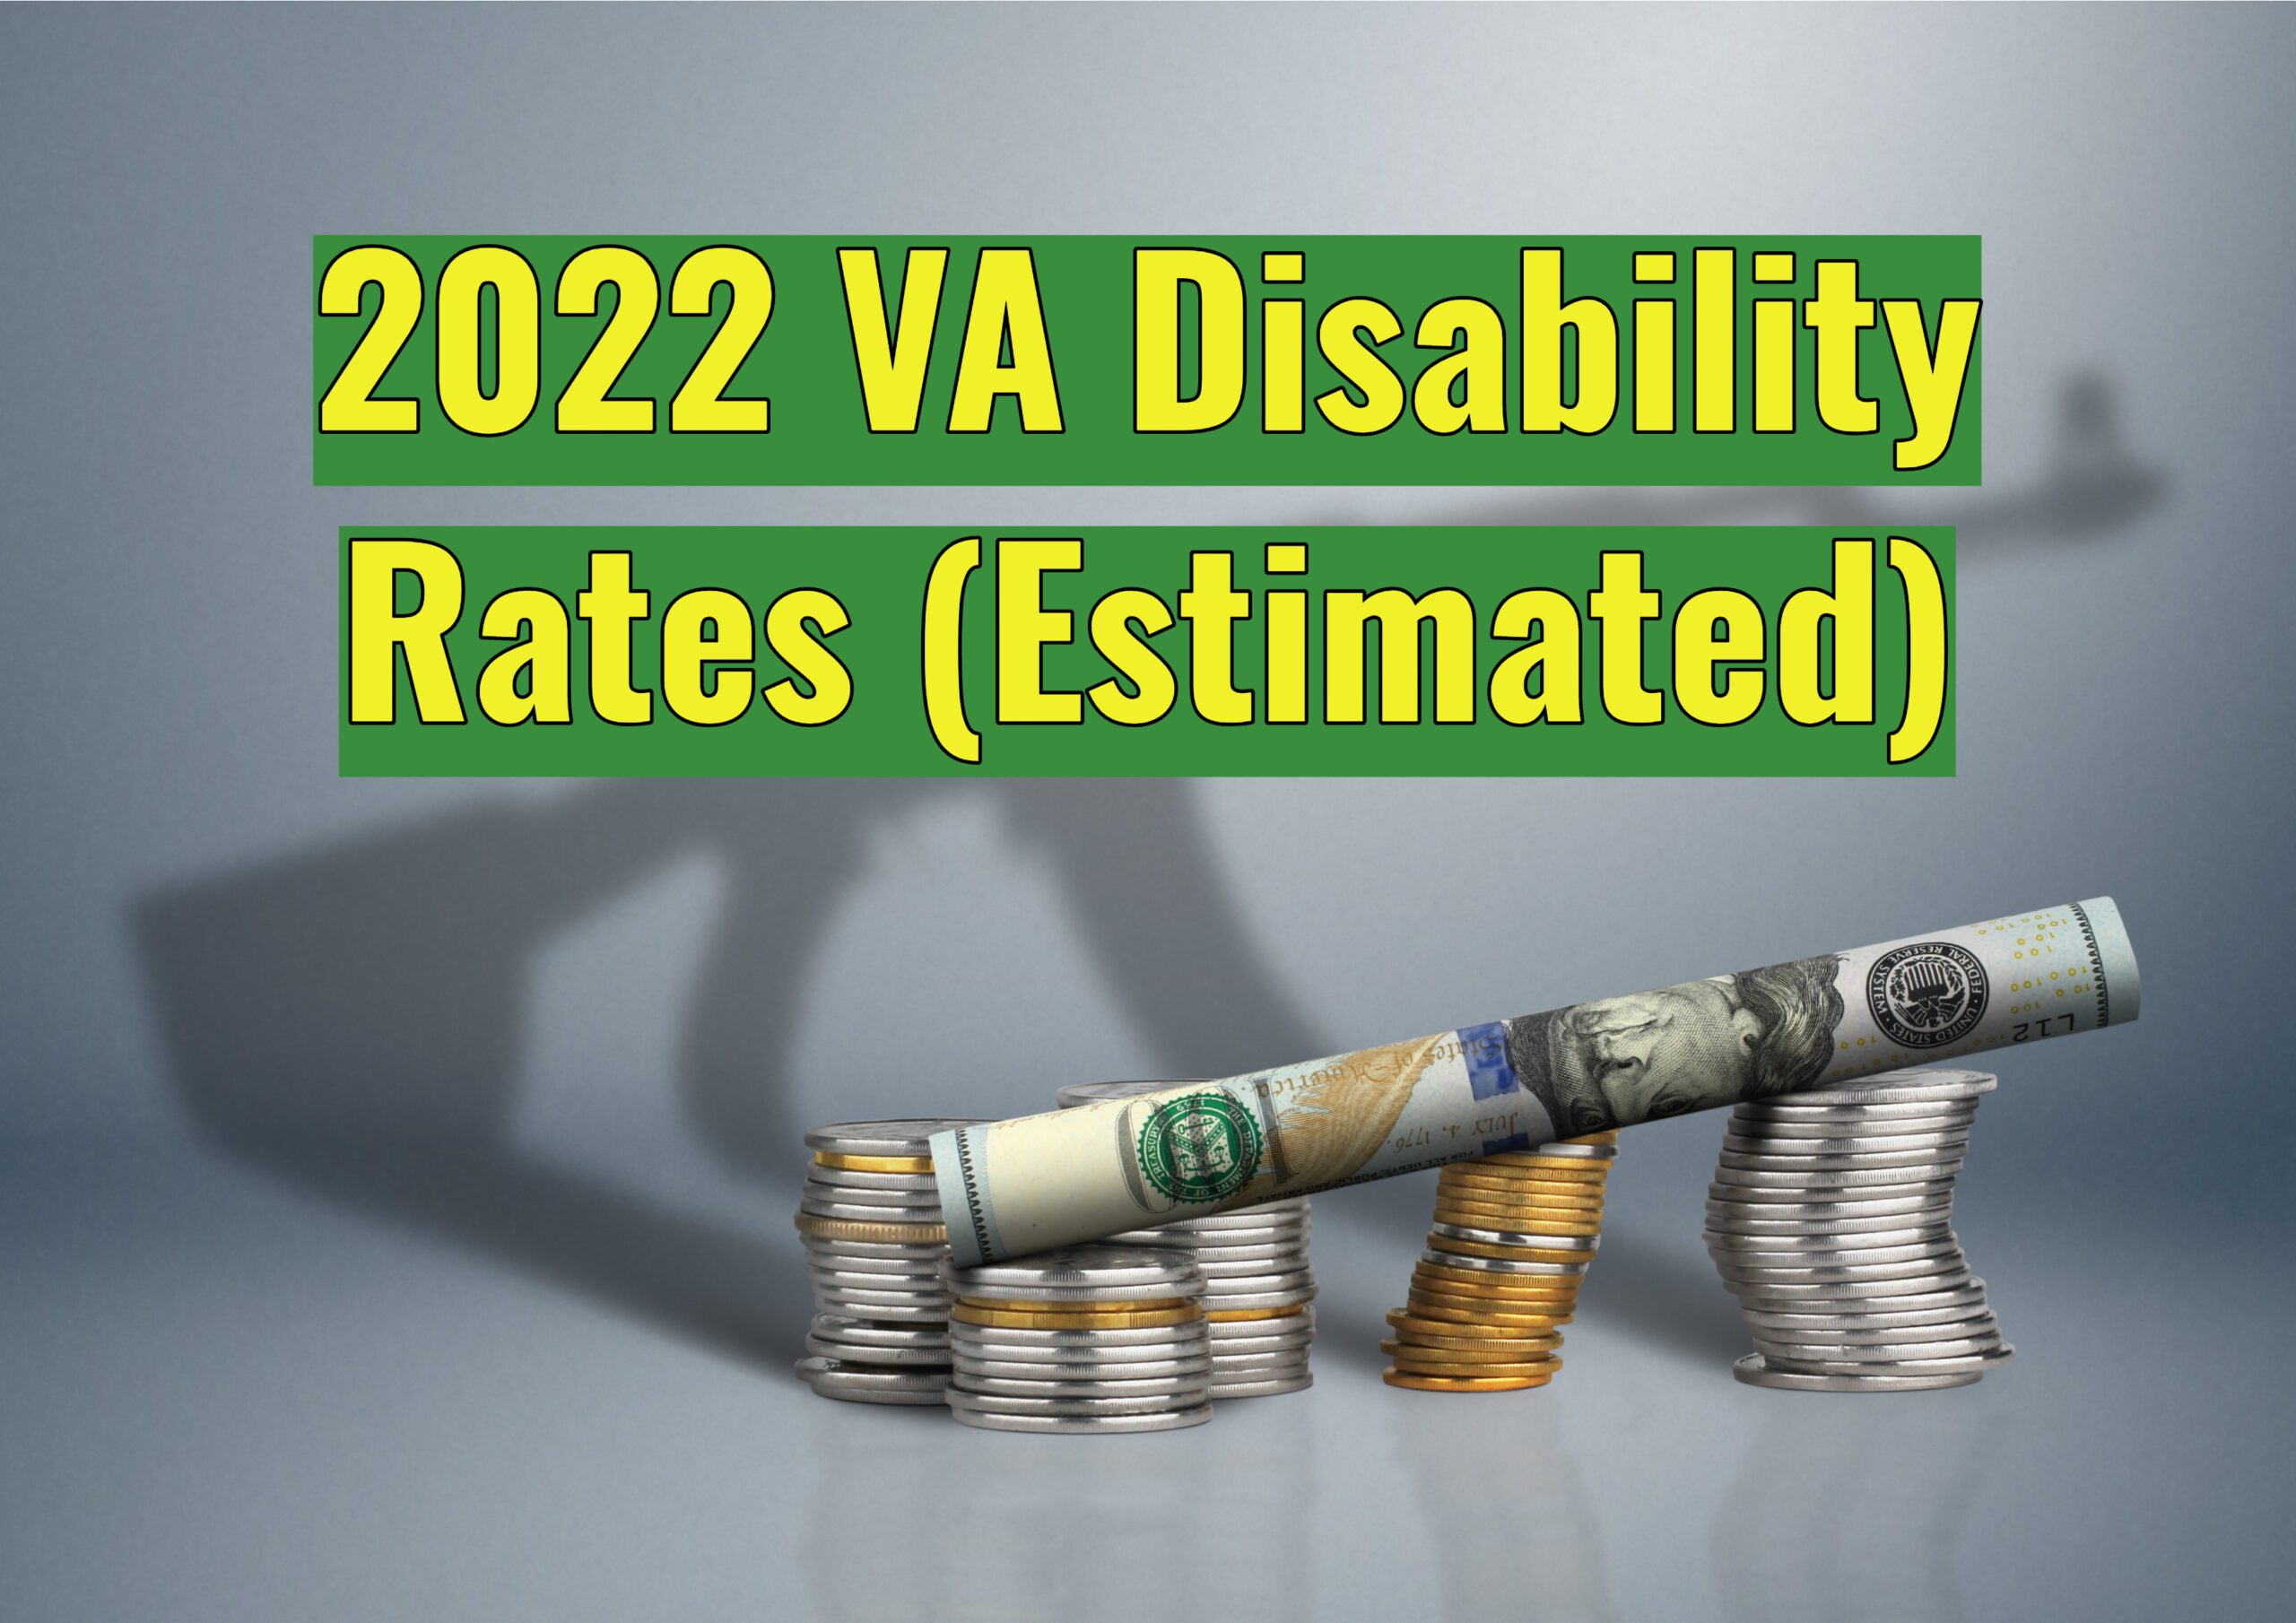 Va Disability Rates 2022 Pay Chart - ABIEWUT